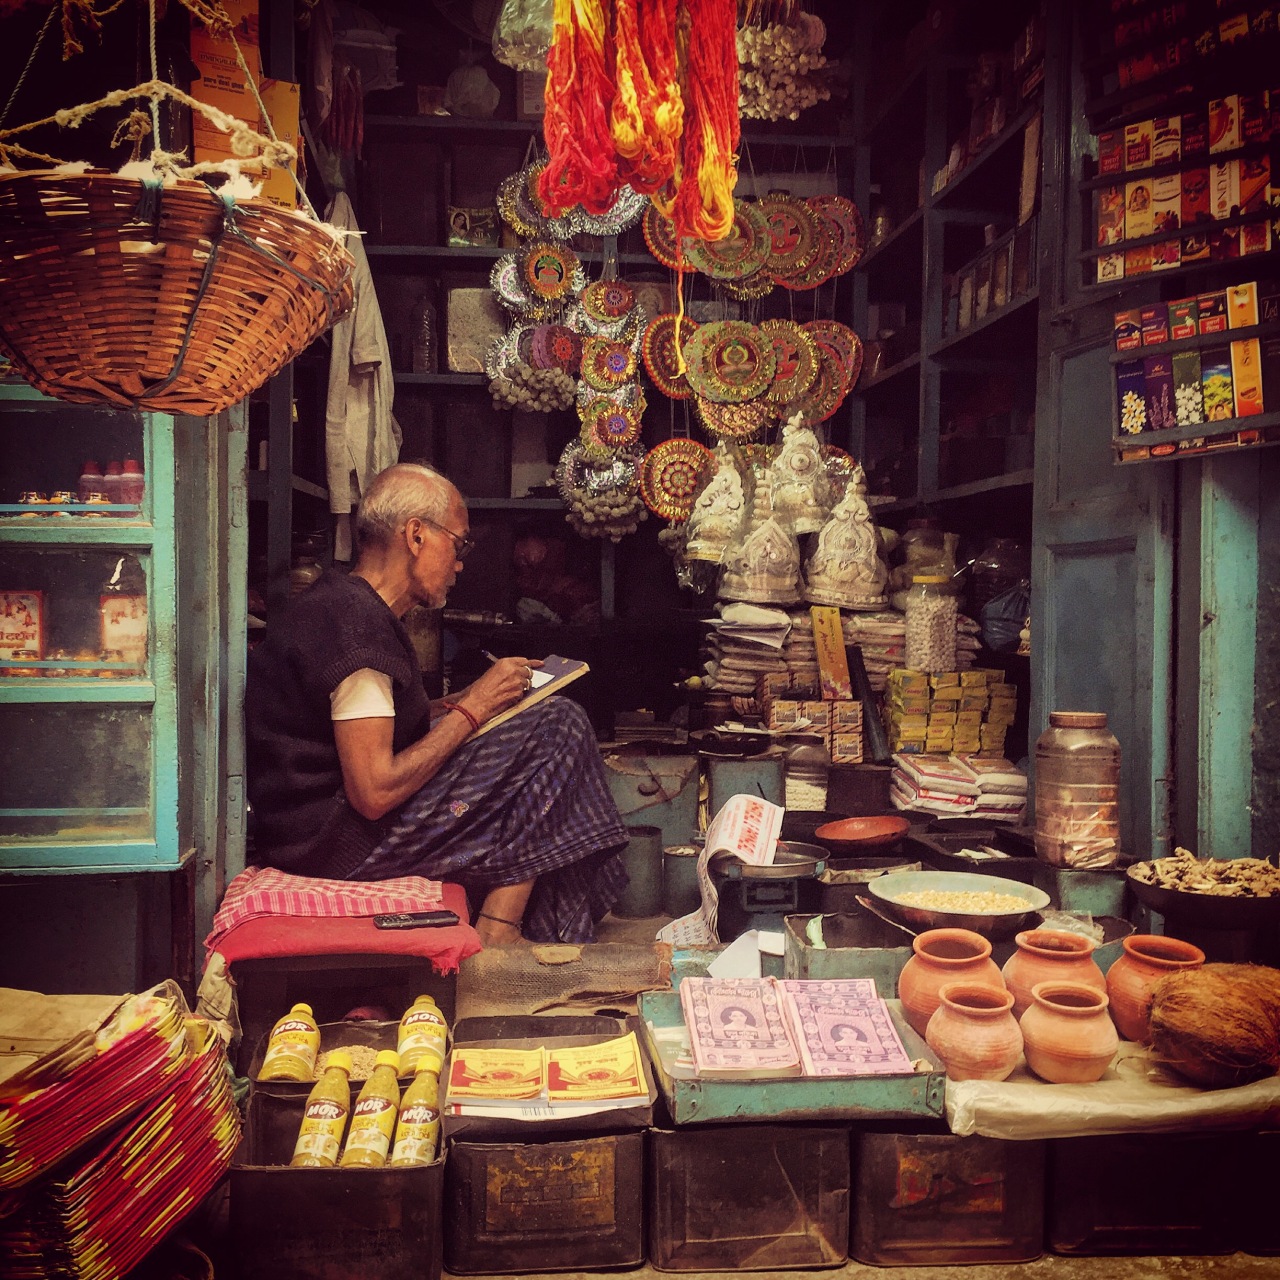 A stroll through the streets of Varanasi